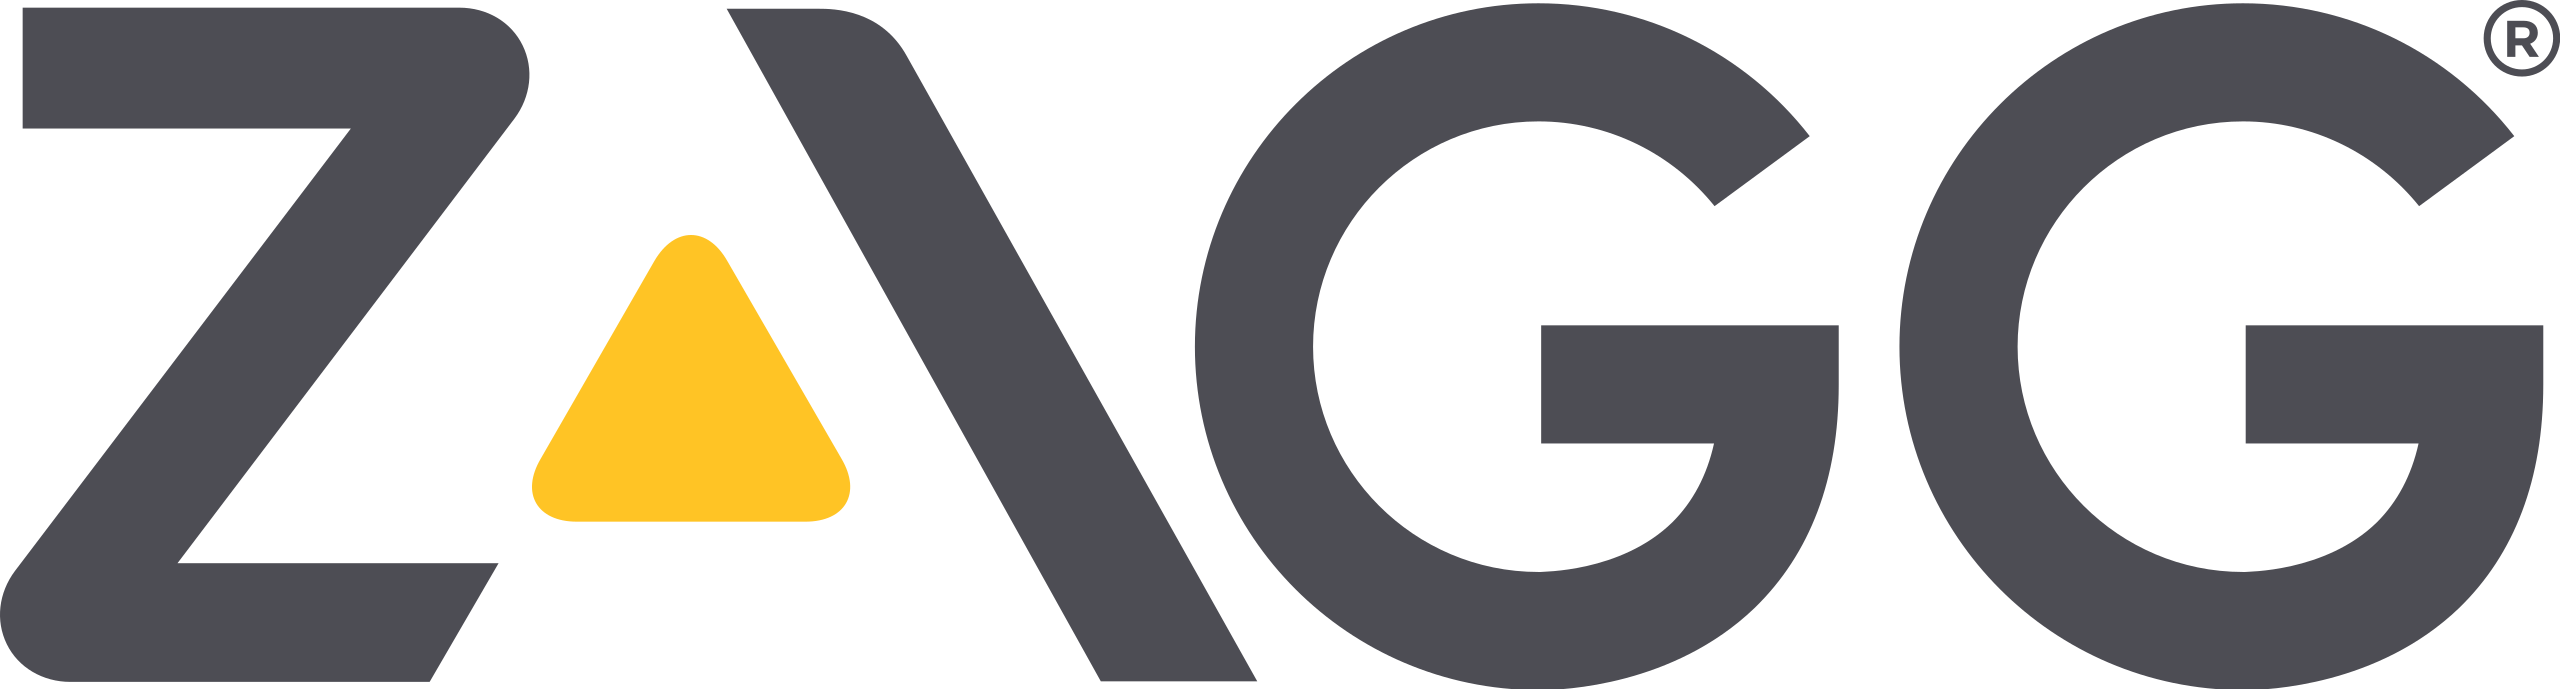 Zagg Retail, Inc Logo